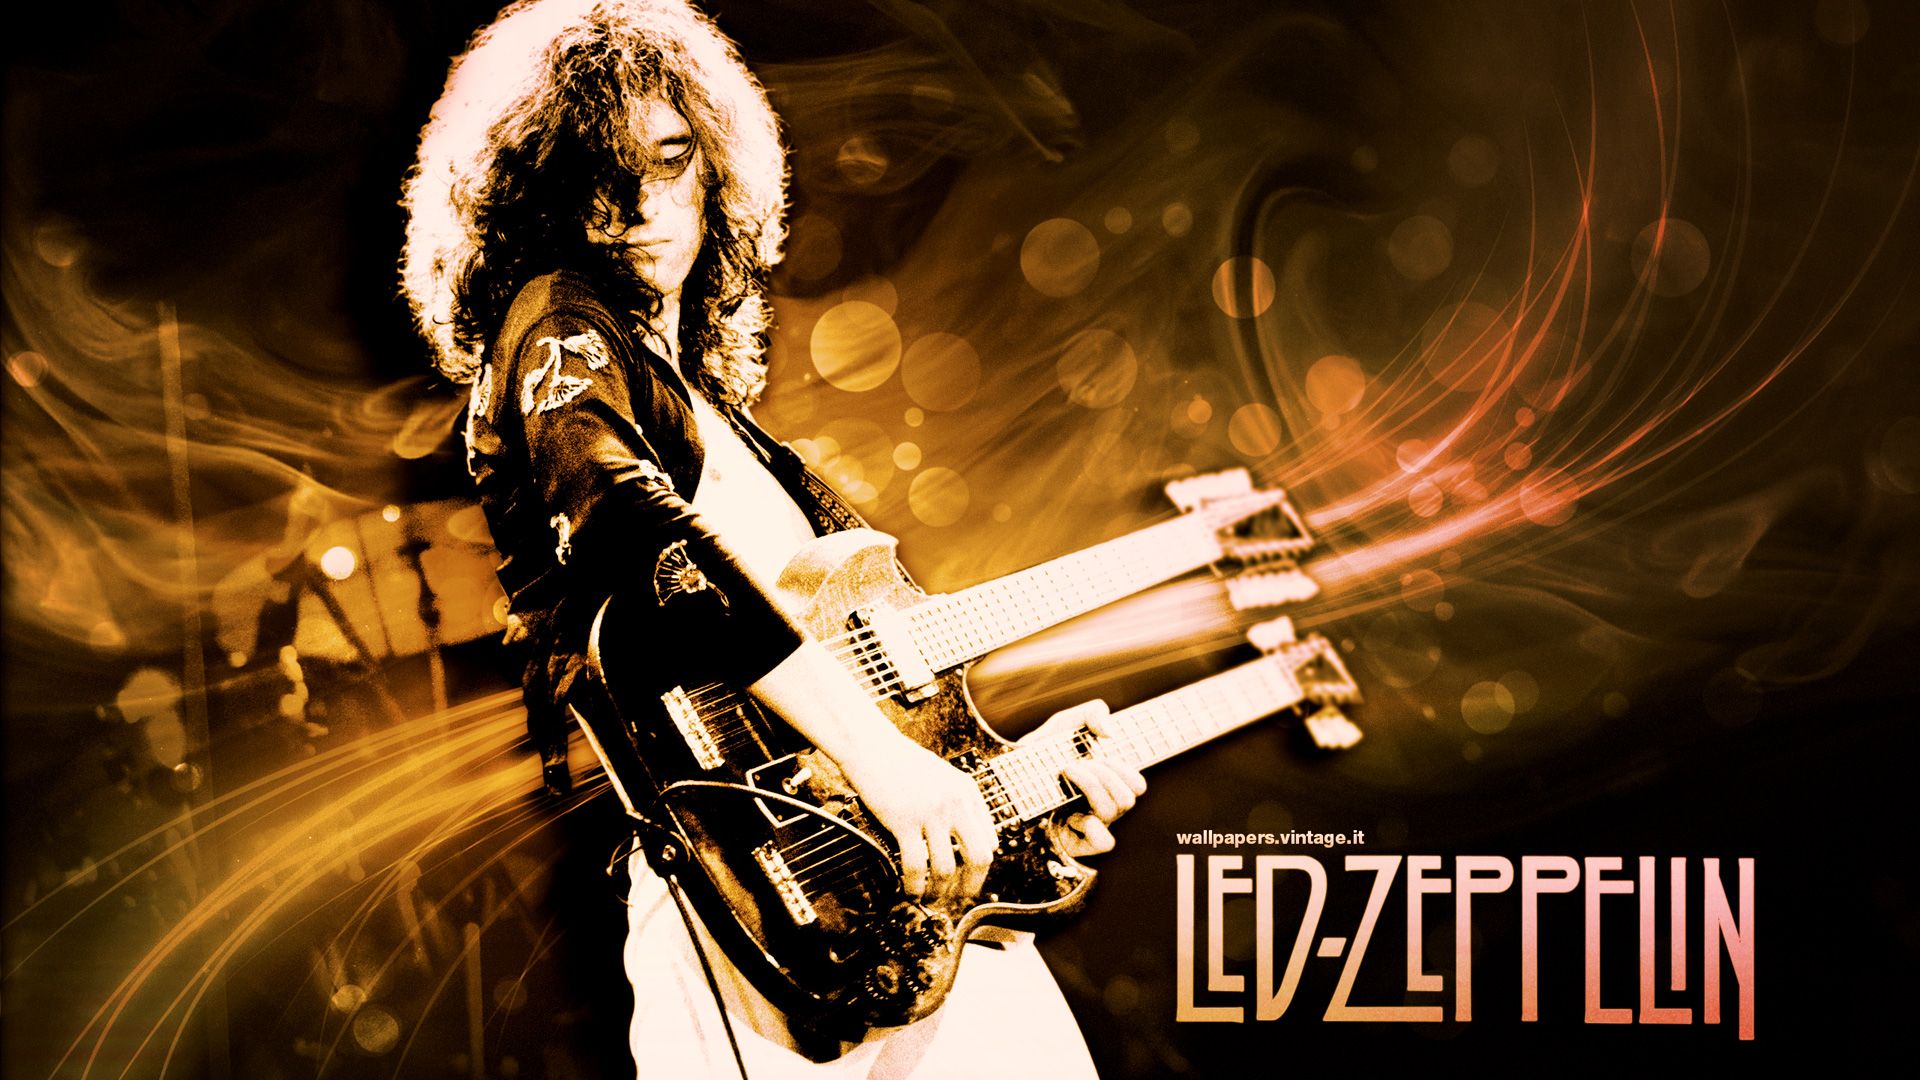 Led Zeppelin wallpaper - Free Desktop HD iPad iPhone wallpapers